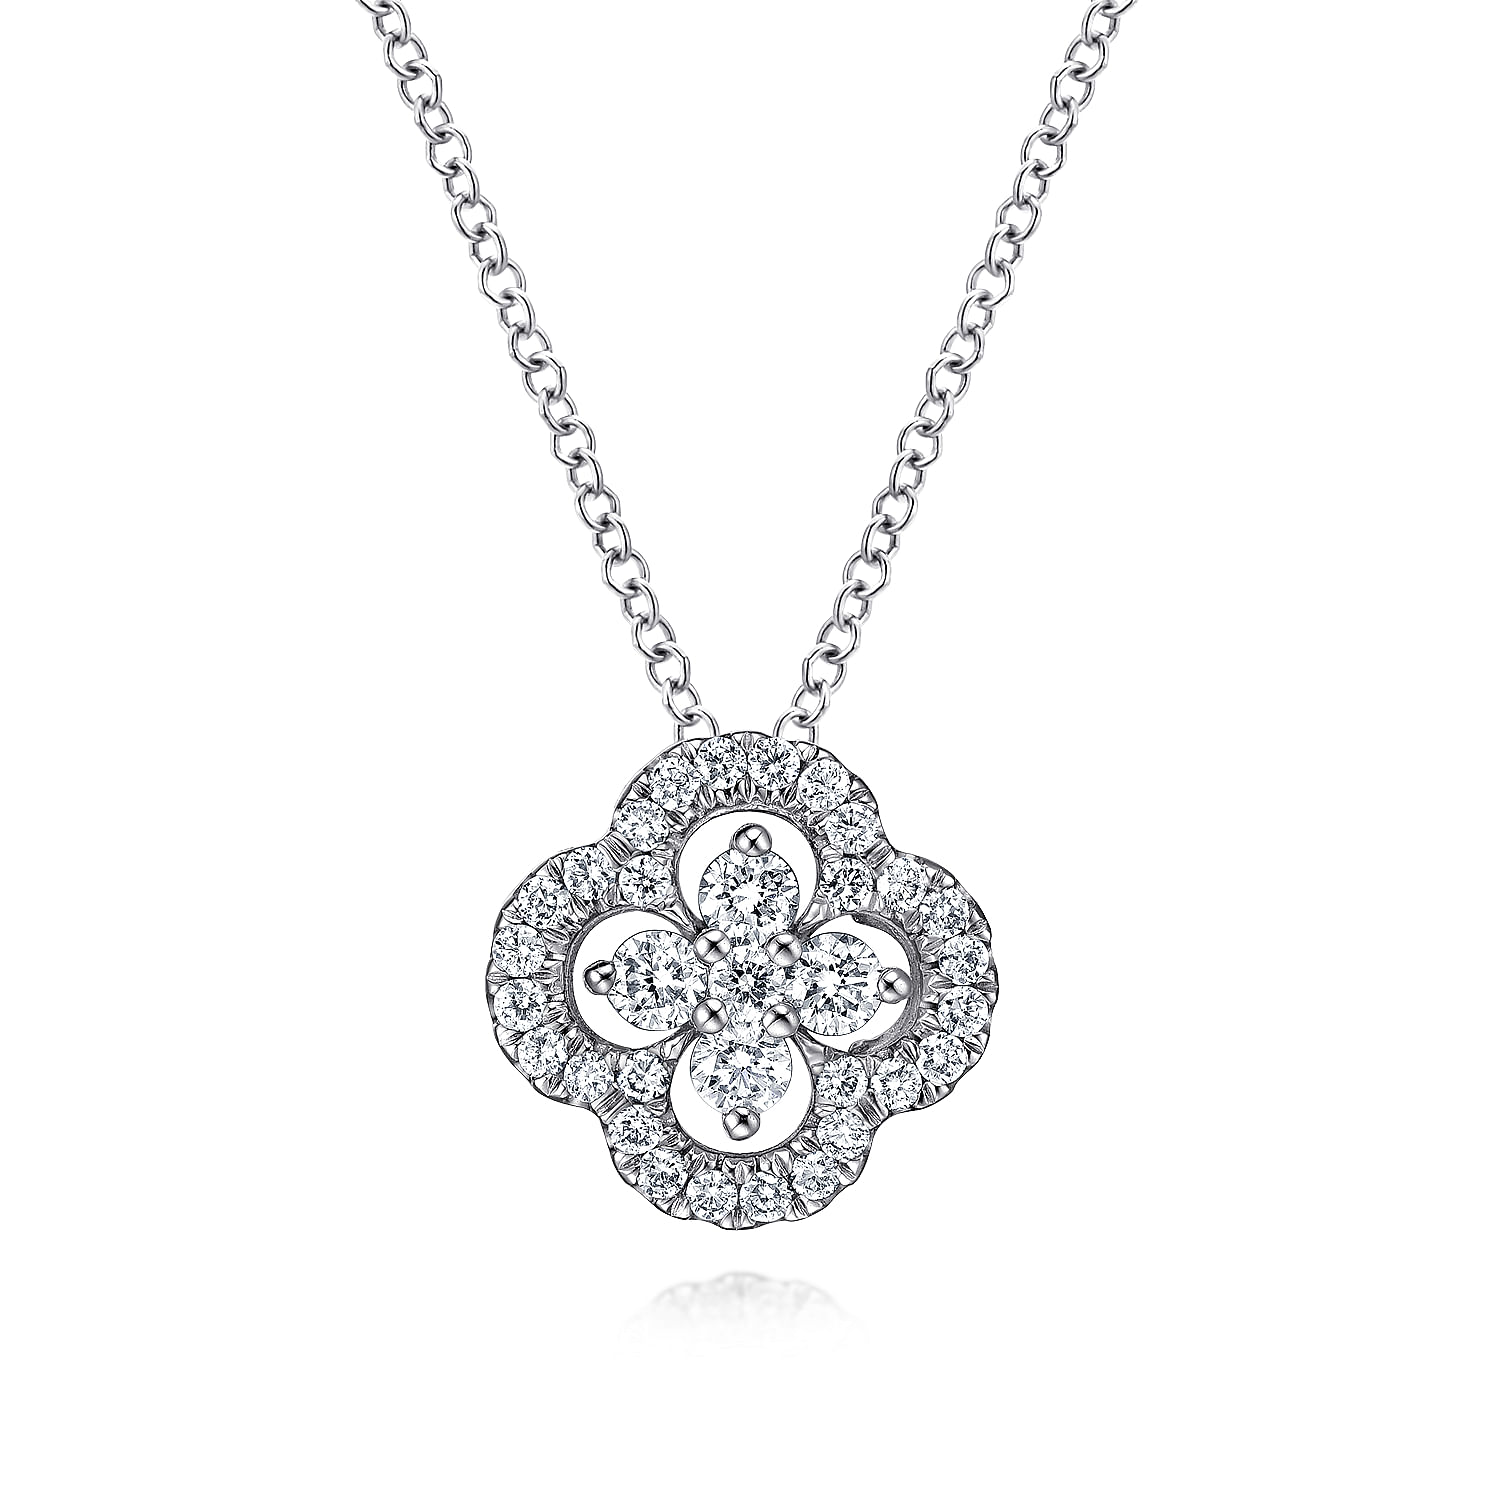 18-inch-14K-White-Gold-Open-Clover-Diamond-Pendant-Necklace1